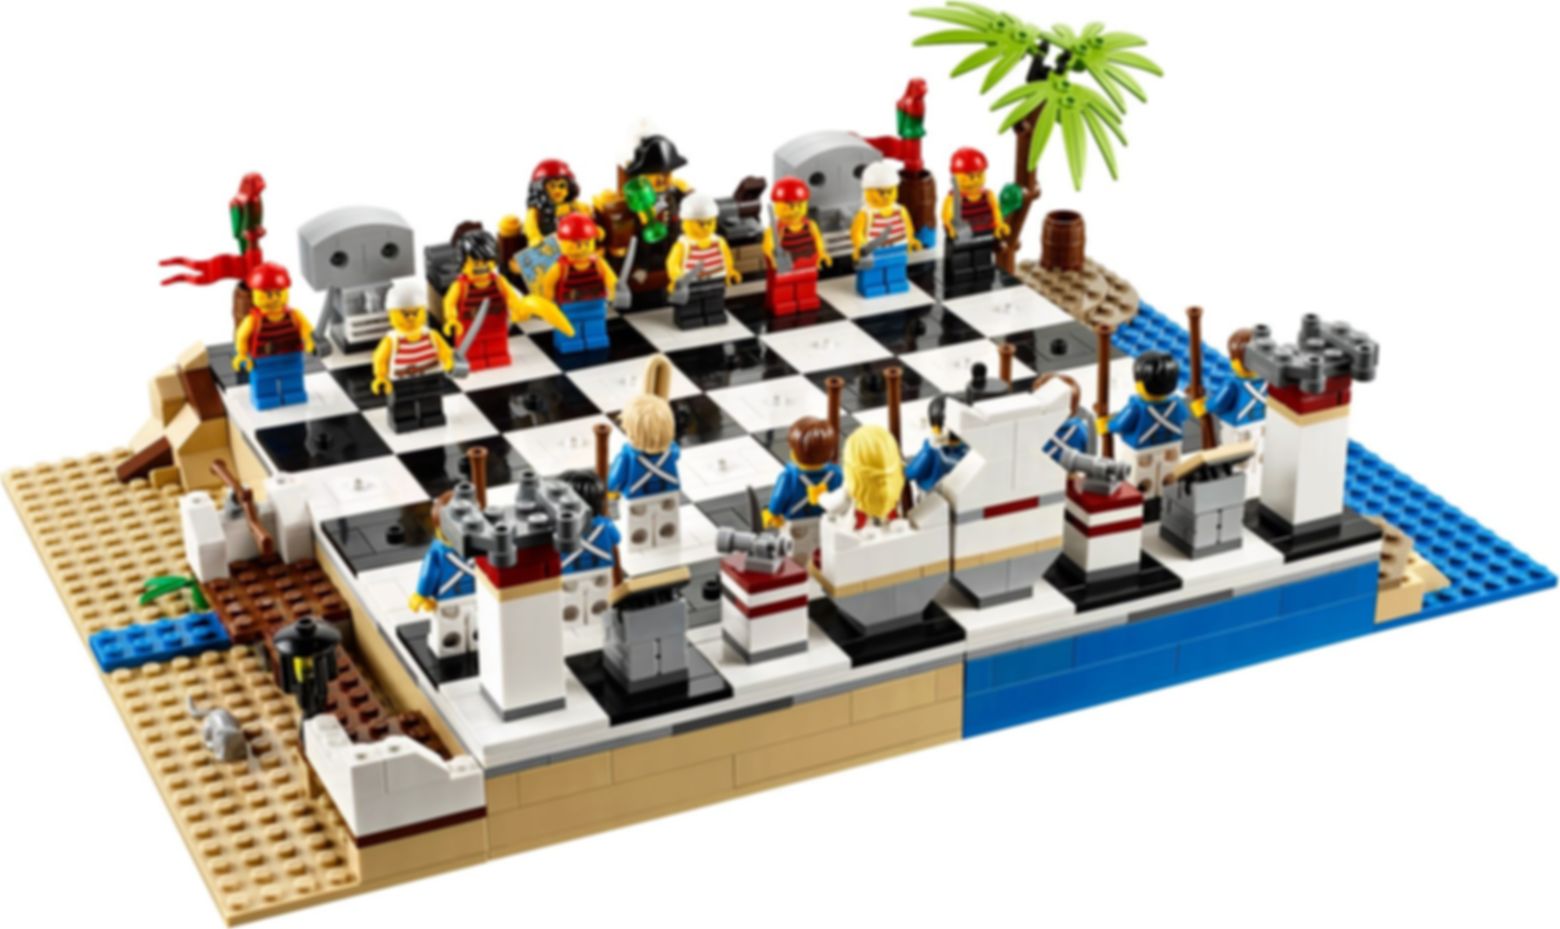 Pirates Chess Set components